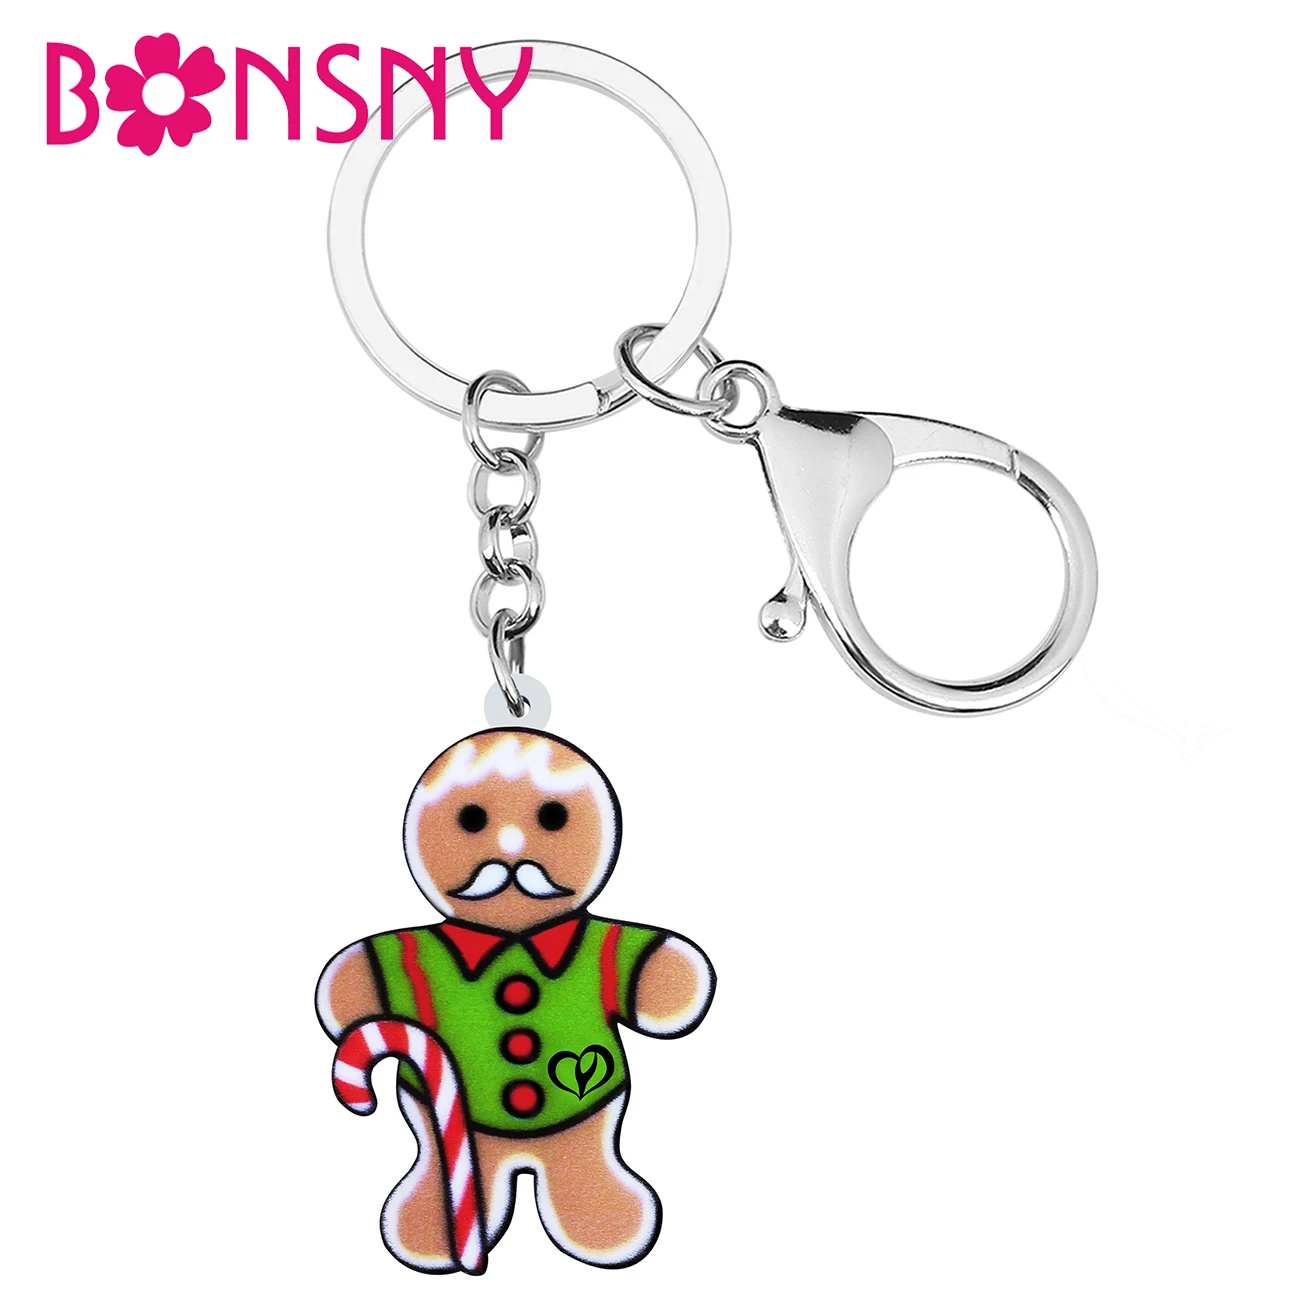 

BONSNY Acrylic Cute Vintage Christmas Gentalmen Gingerbread Man Keychains Trendy Car Key Chain Ring Jewelry For Women Teen Gifts